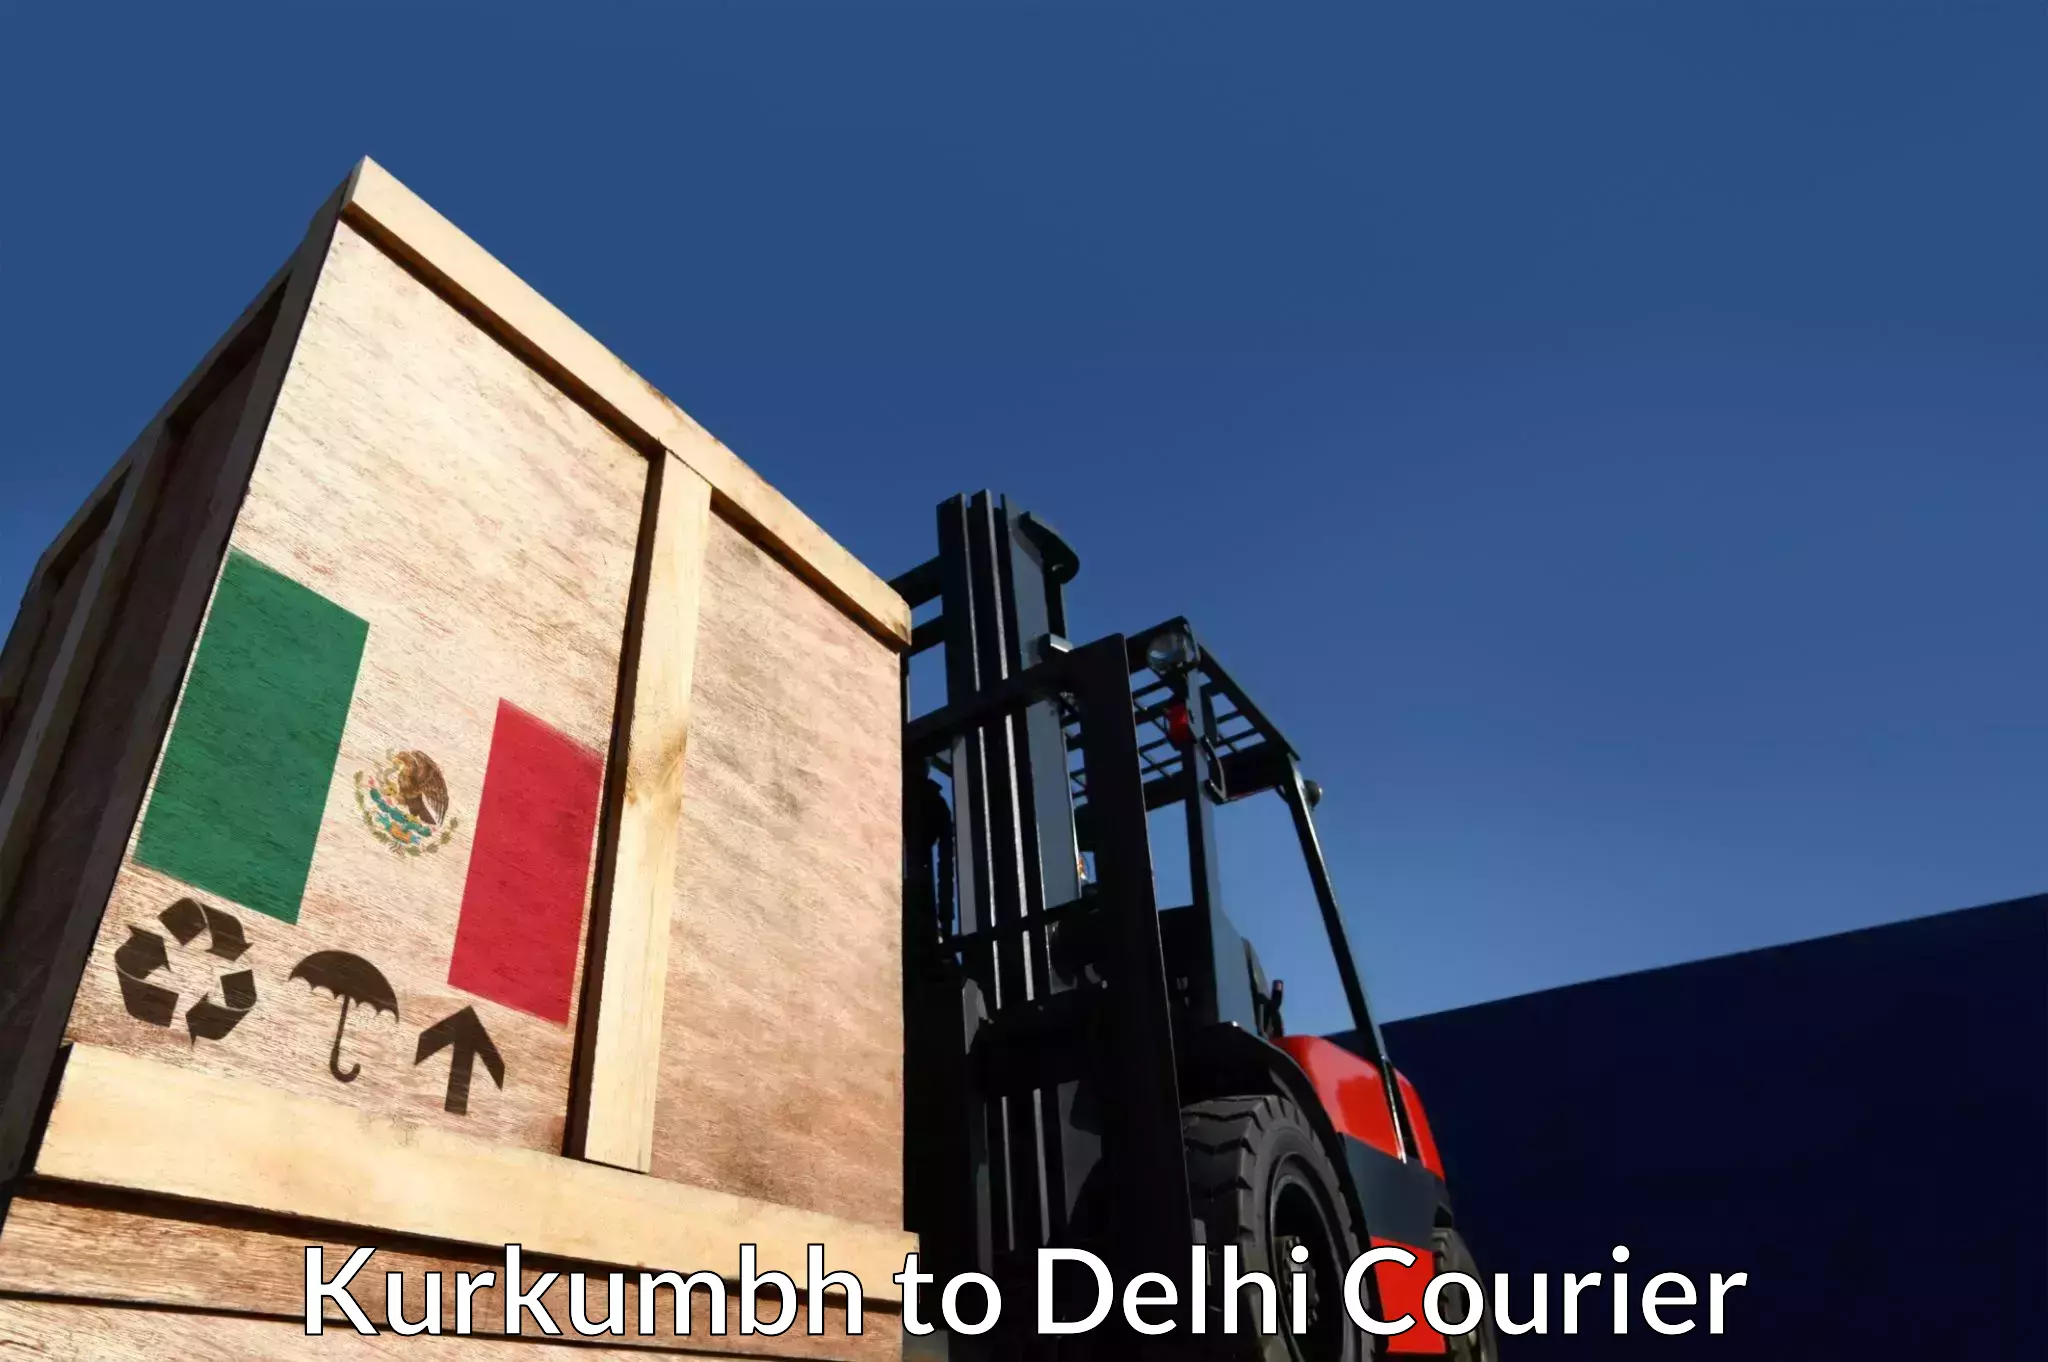 Courier service booking Kurkumbh to Lodhi Road